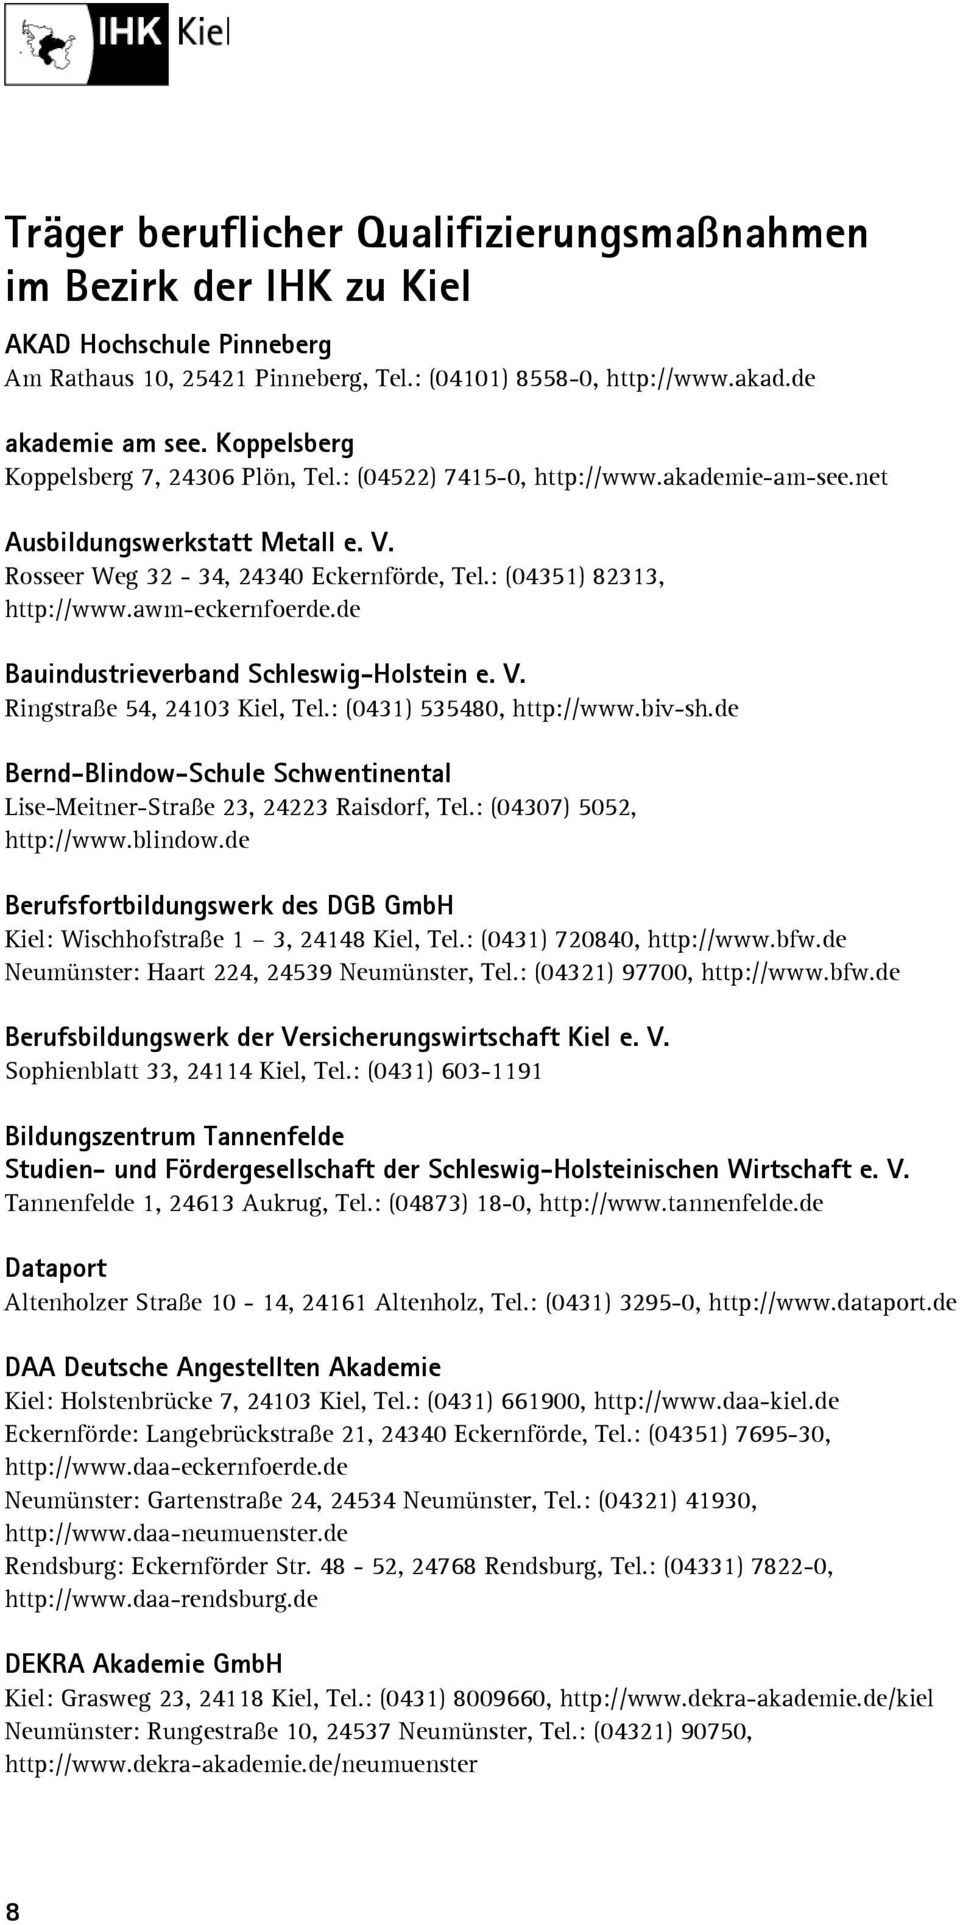 awm-eckernfoerde.de Bauindustrieverband Schleswig-Holstein e. V. Ringstraße 54, 24103 Kiel, Tel.: (0431) 535480, http://www.biv-sh.